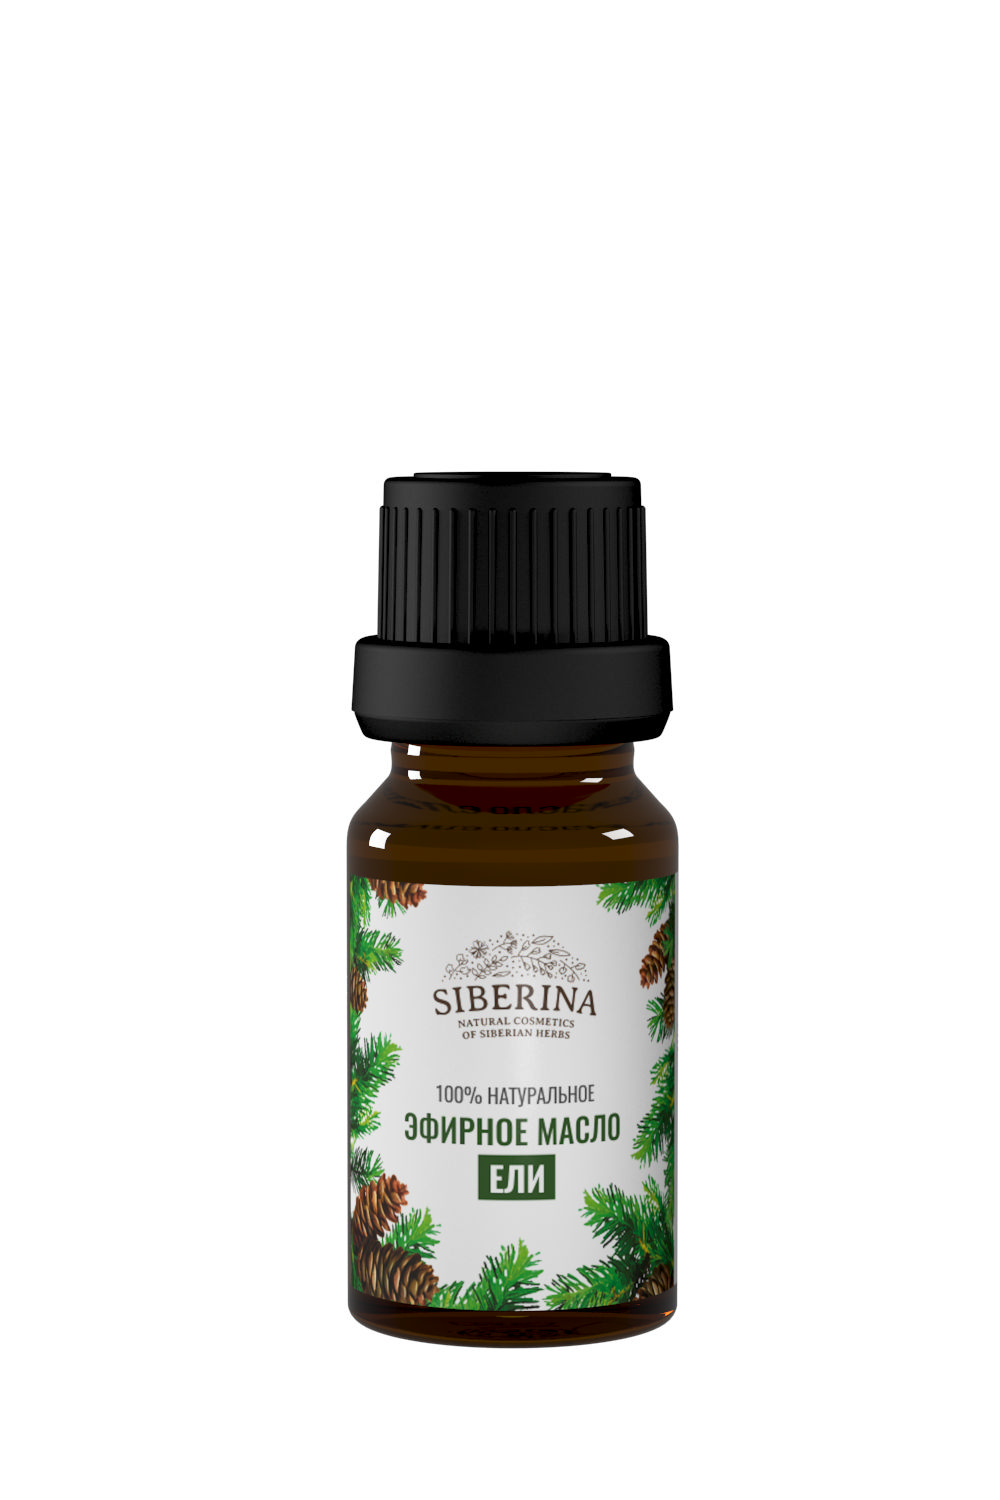 Spruce essential oil